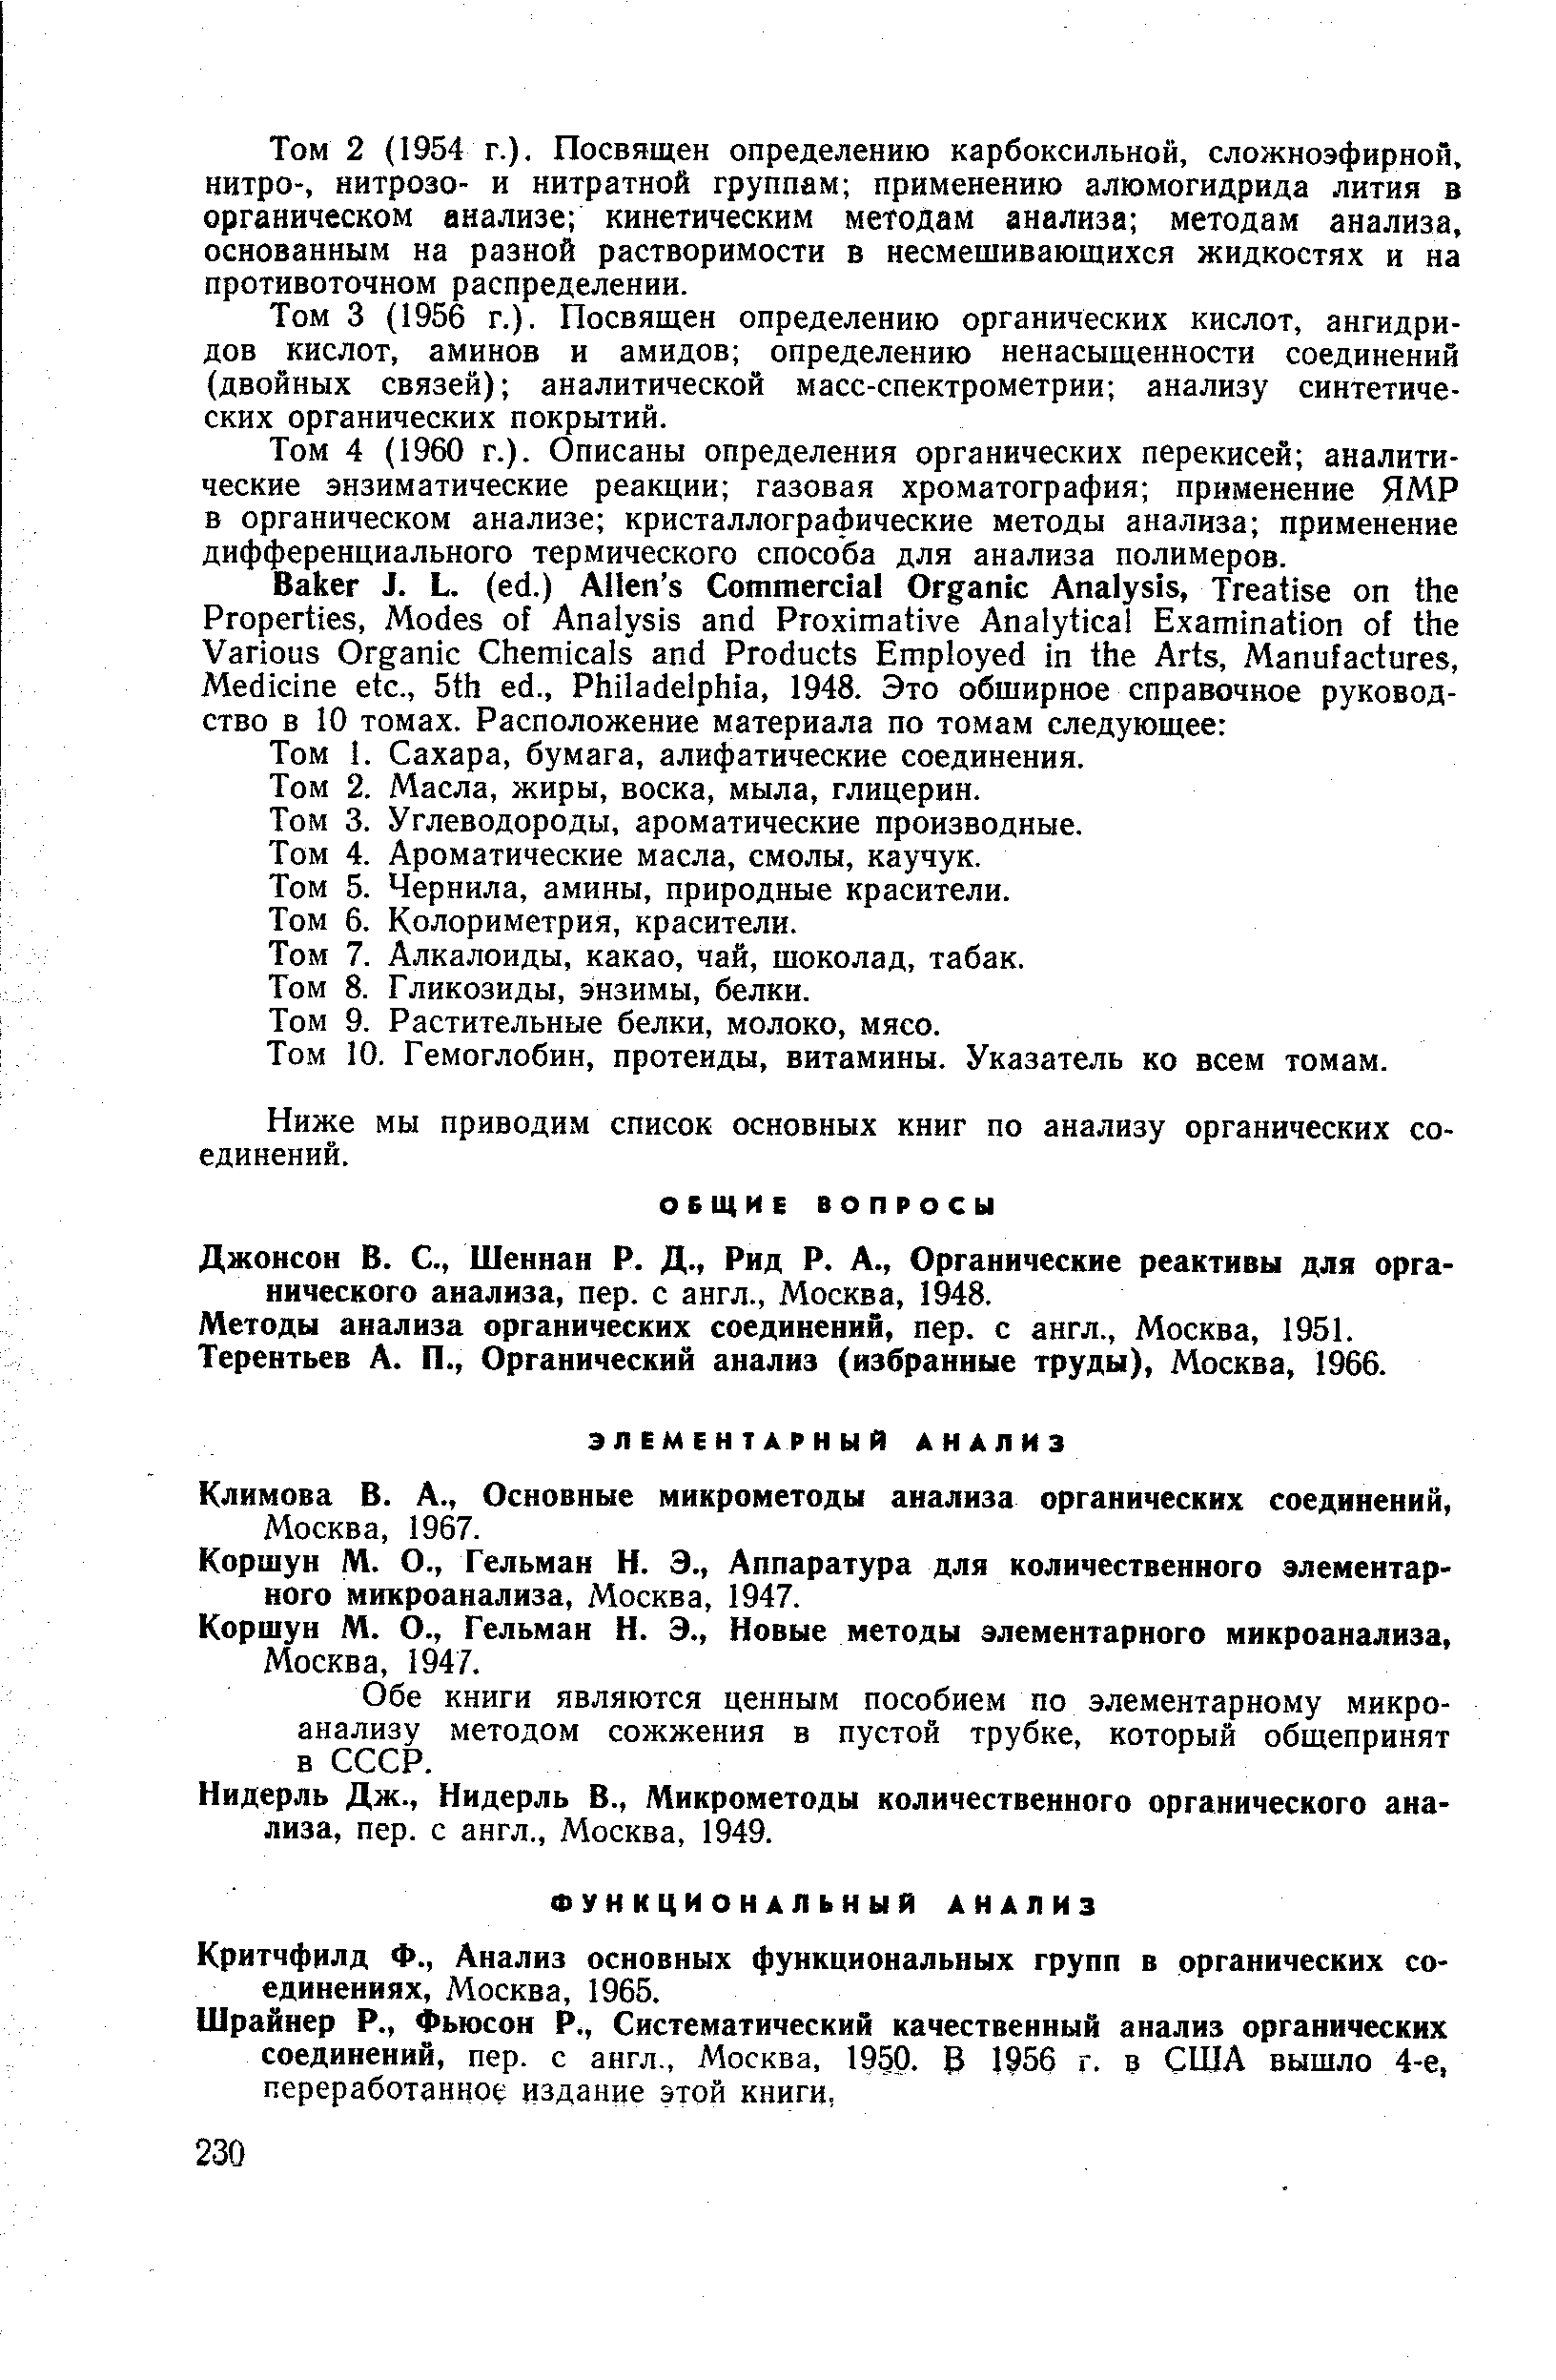 Коршун М. О., Гельман Н. 3., Аппаратура для количественного элементарного микроанализа, Москва, 1947.